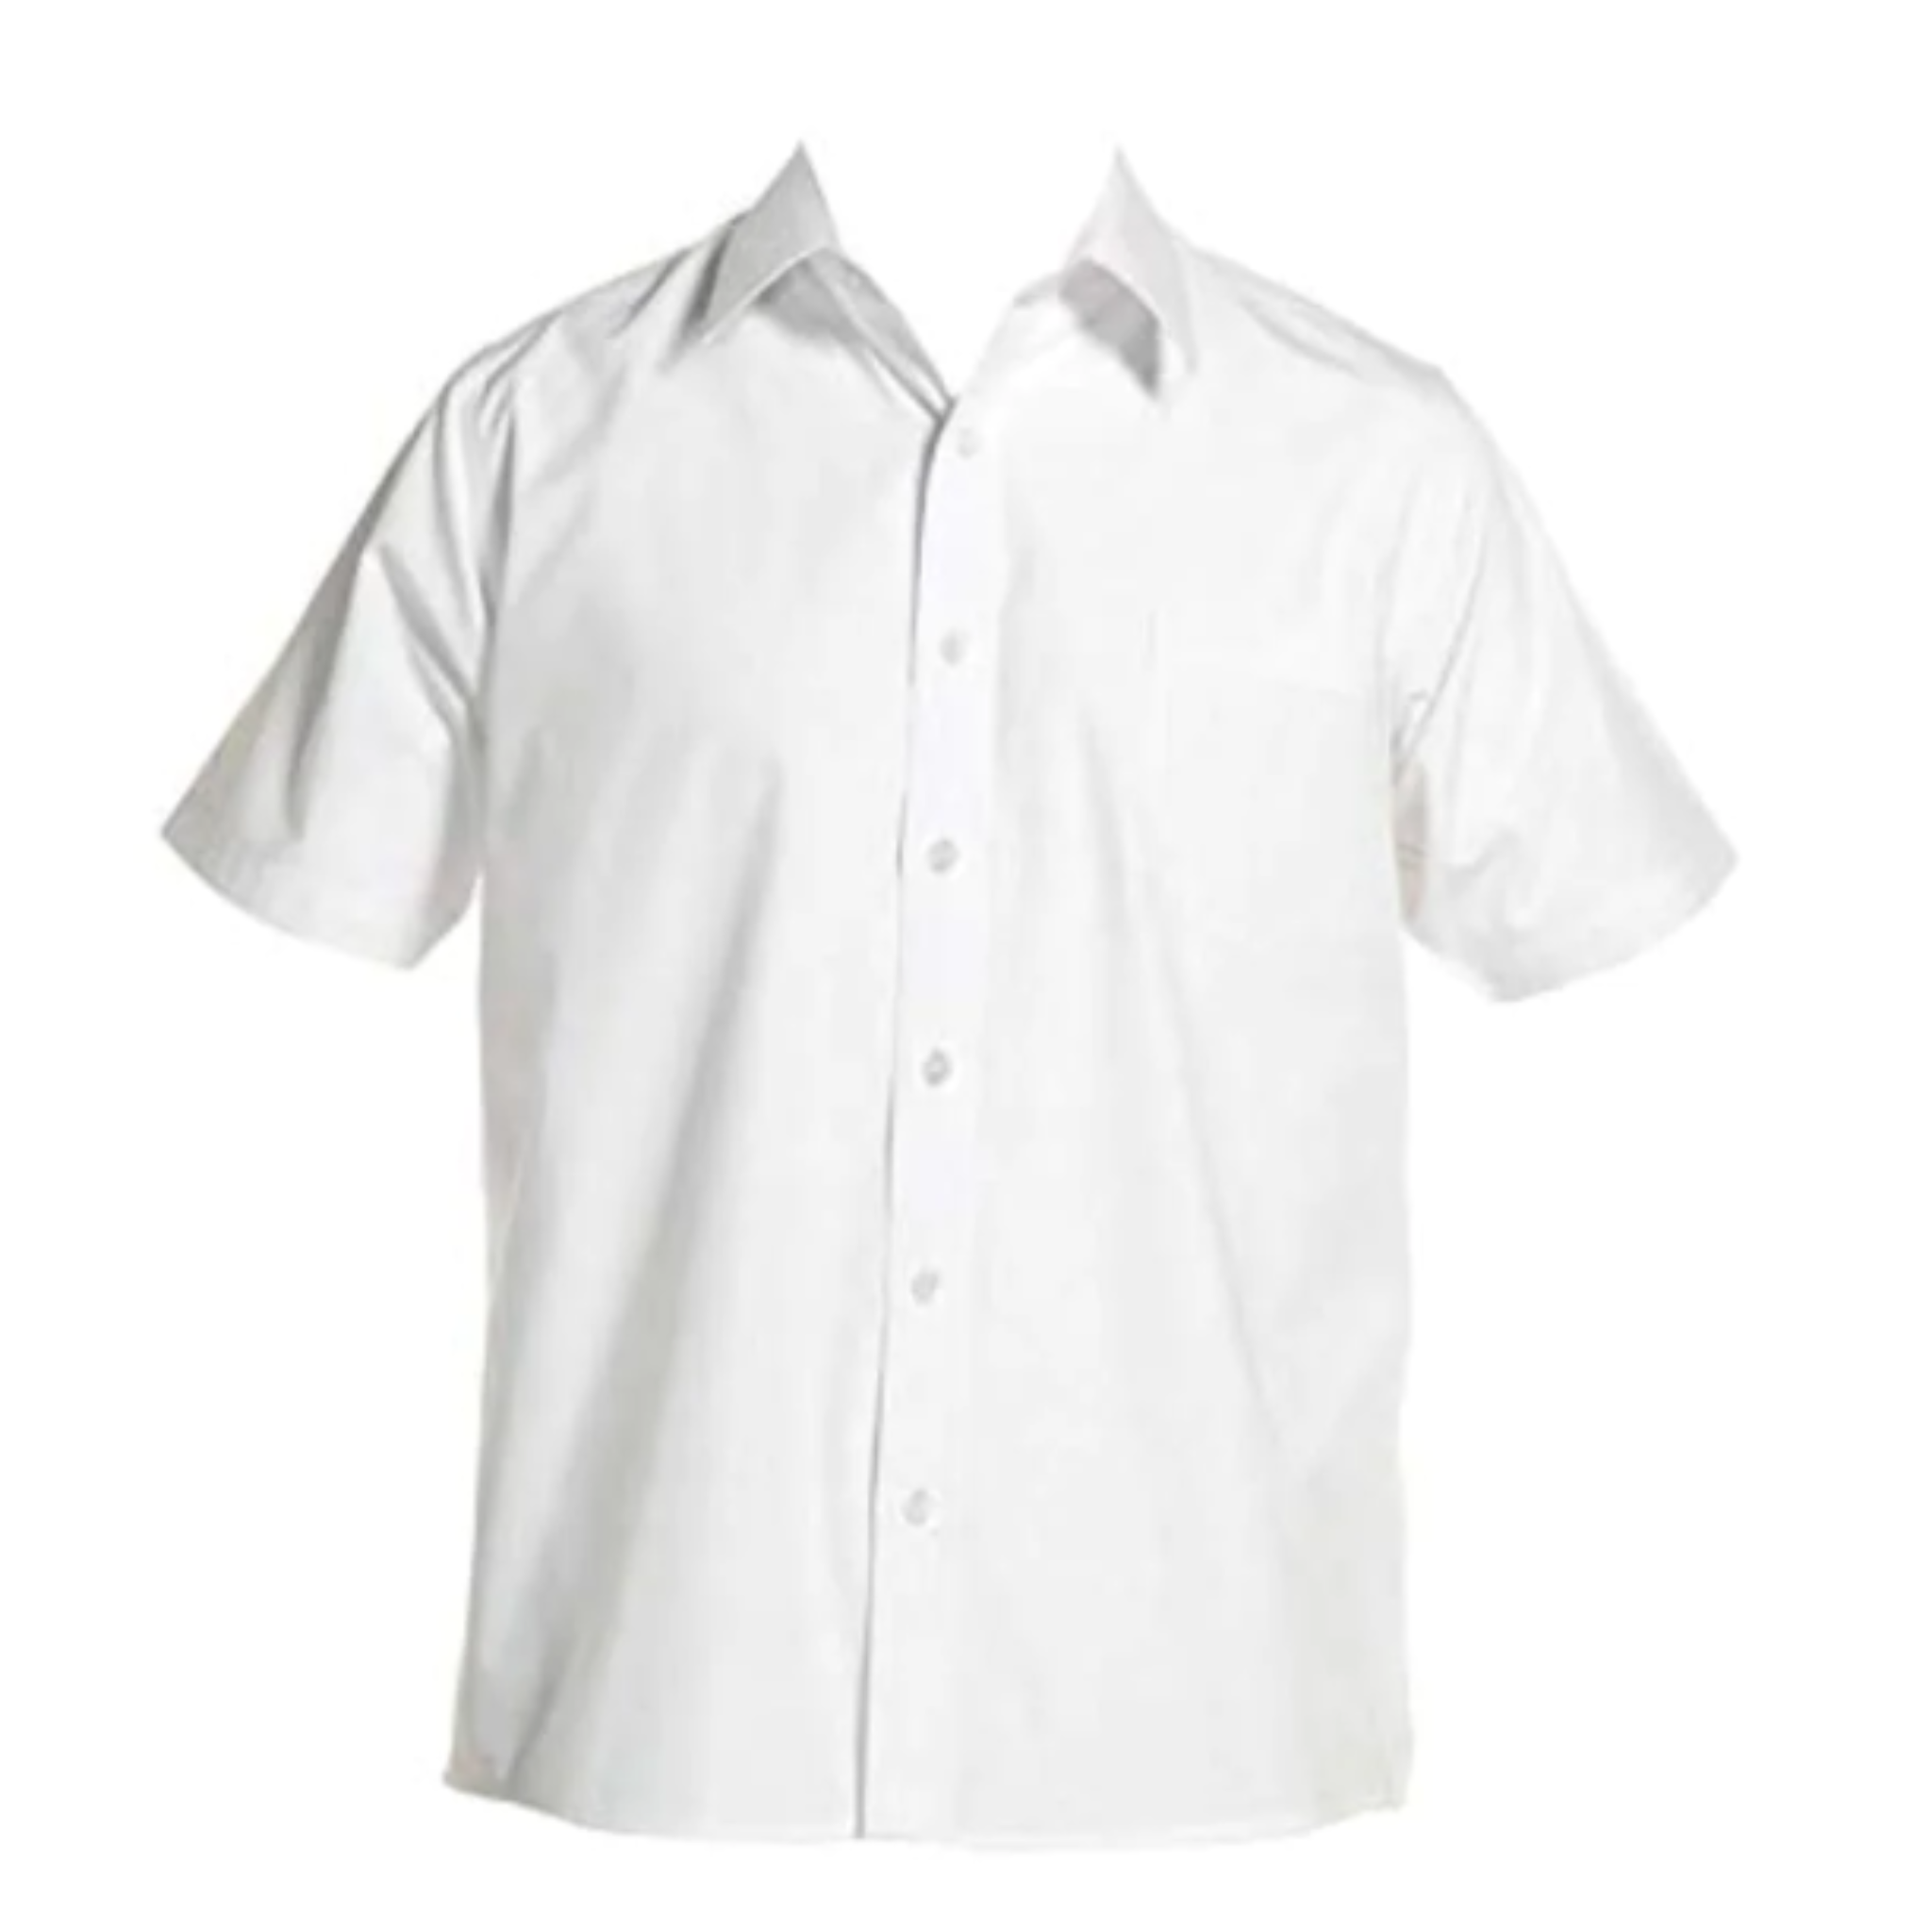 Adaptive Clothing - Autism Friendly School Shirt - Short Sleeve Shirt